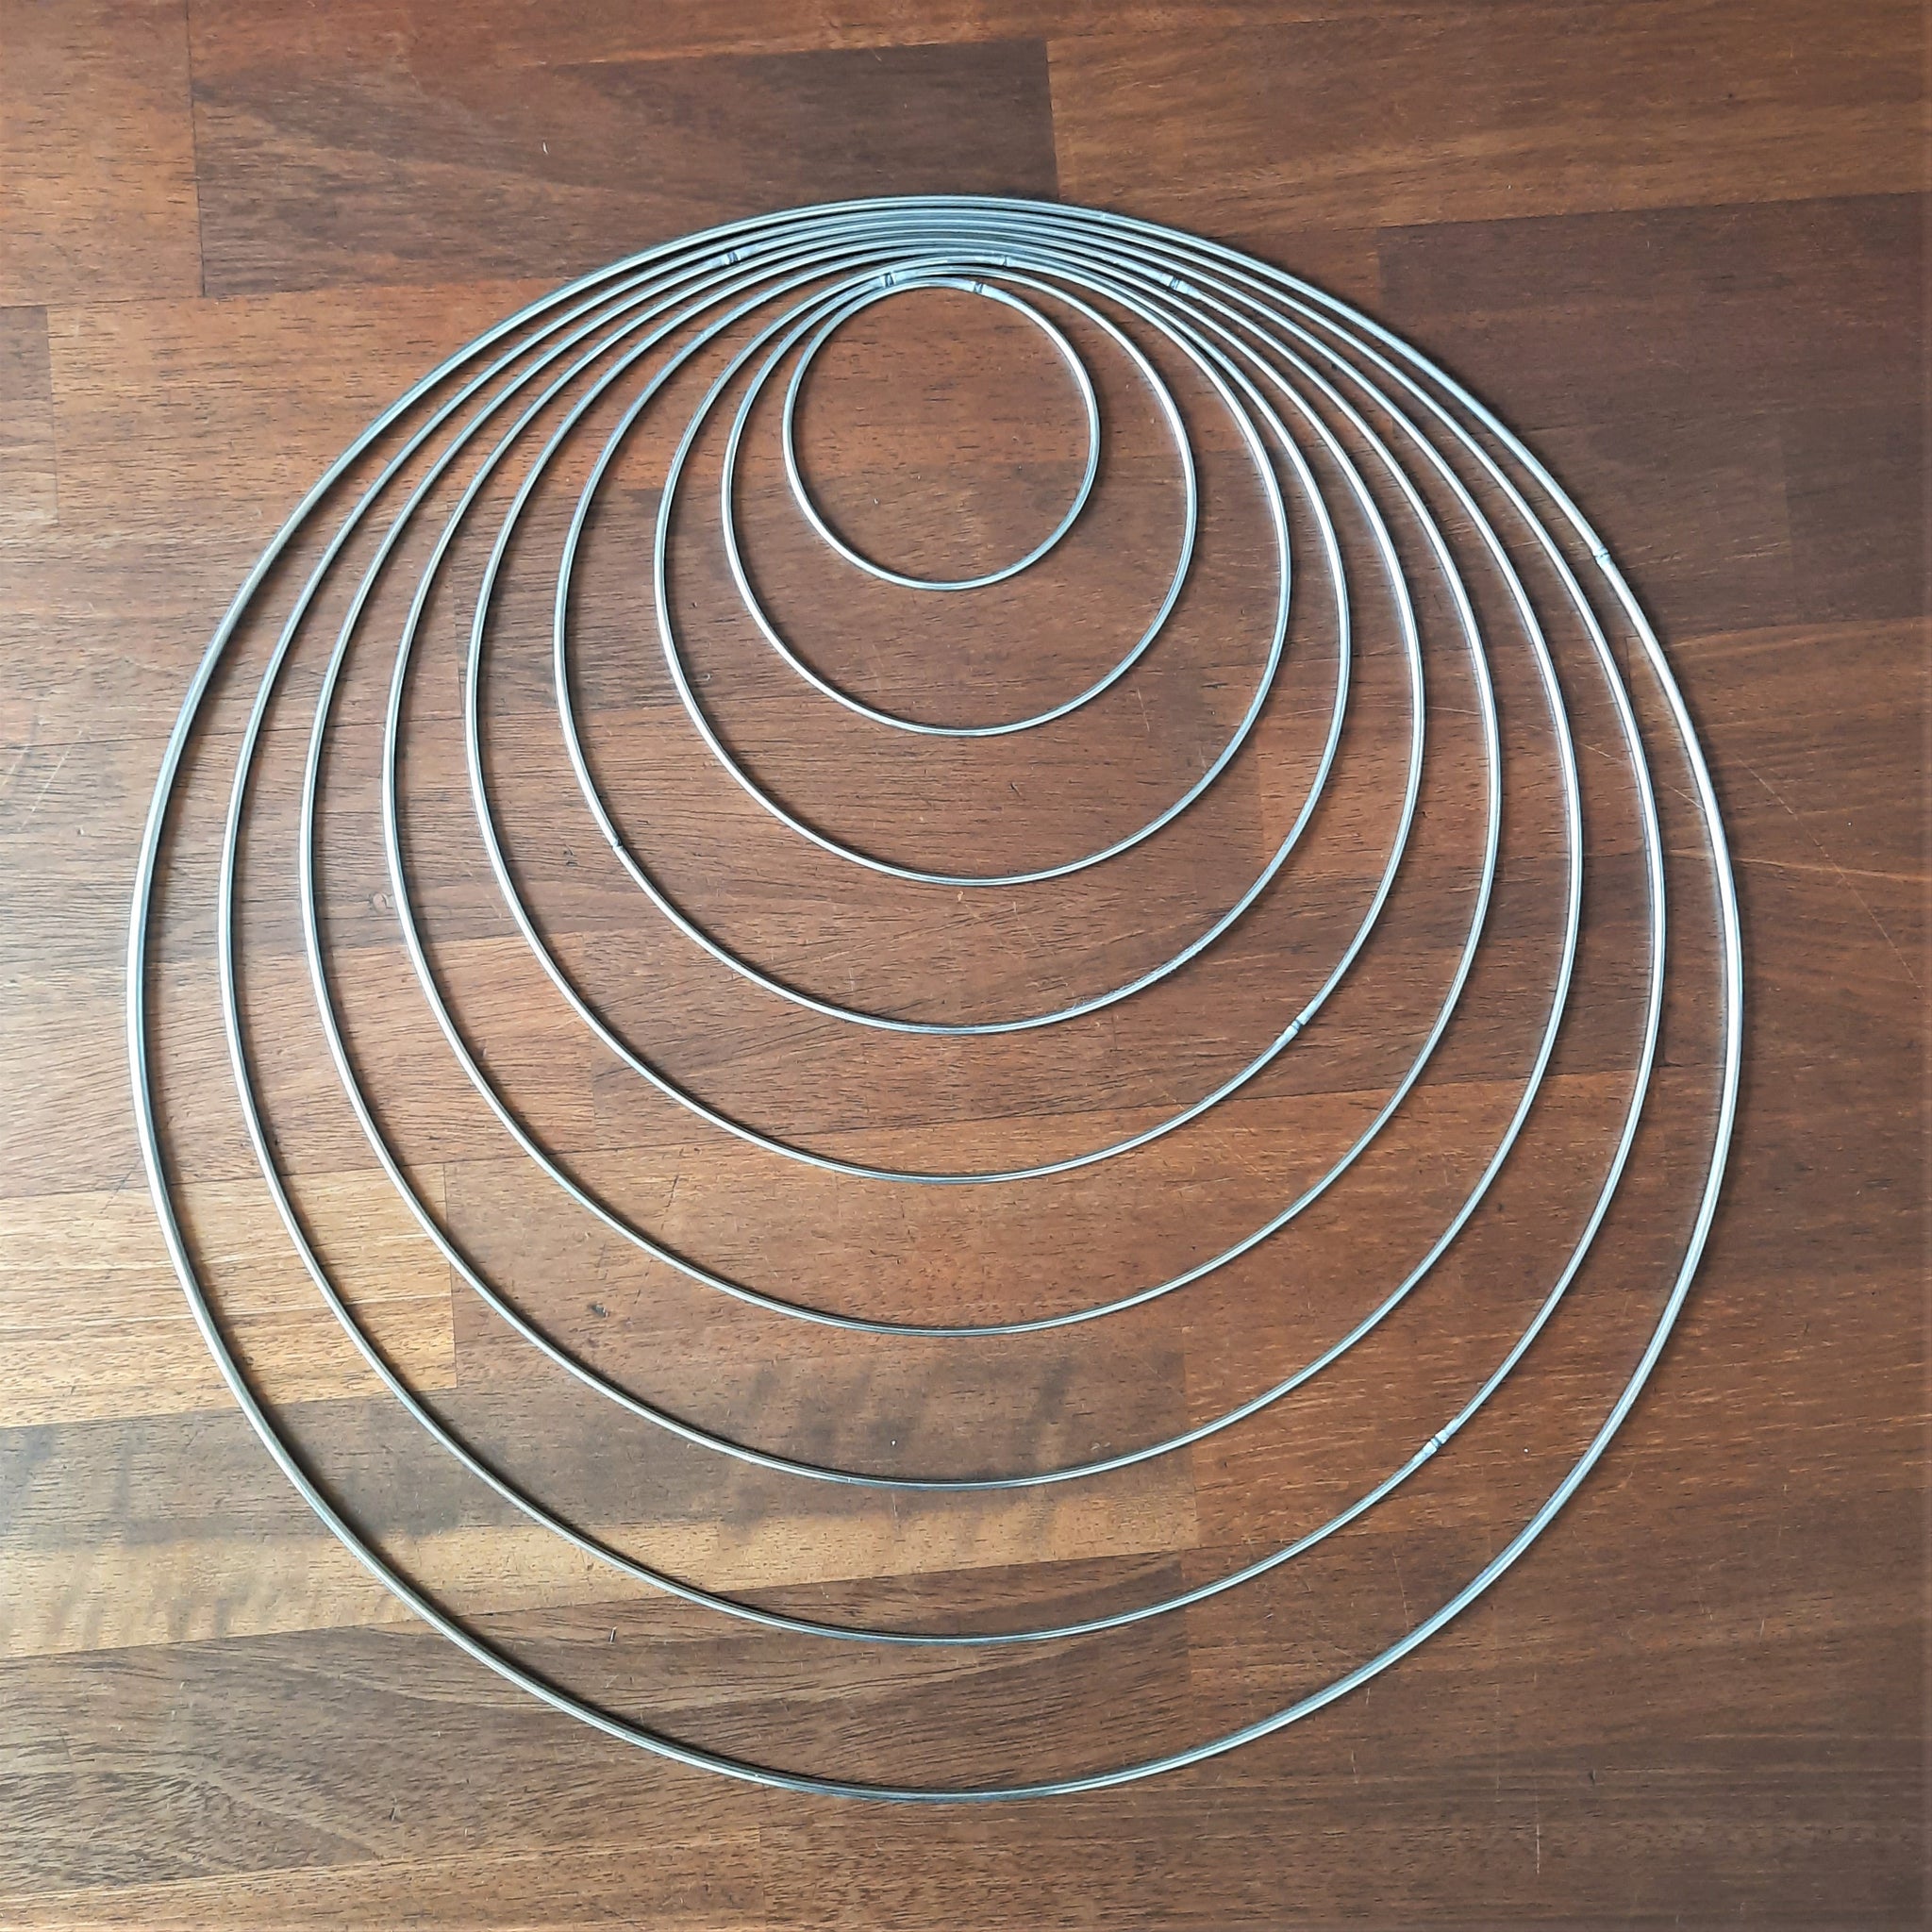 50cm diameter mandala ring - It's all in a nutshell